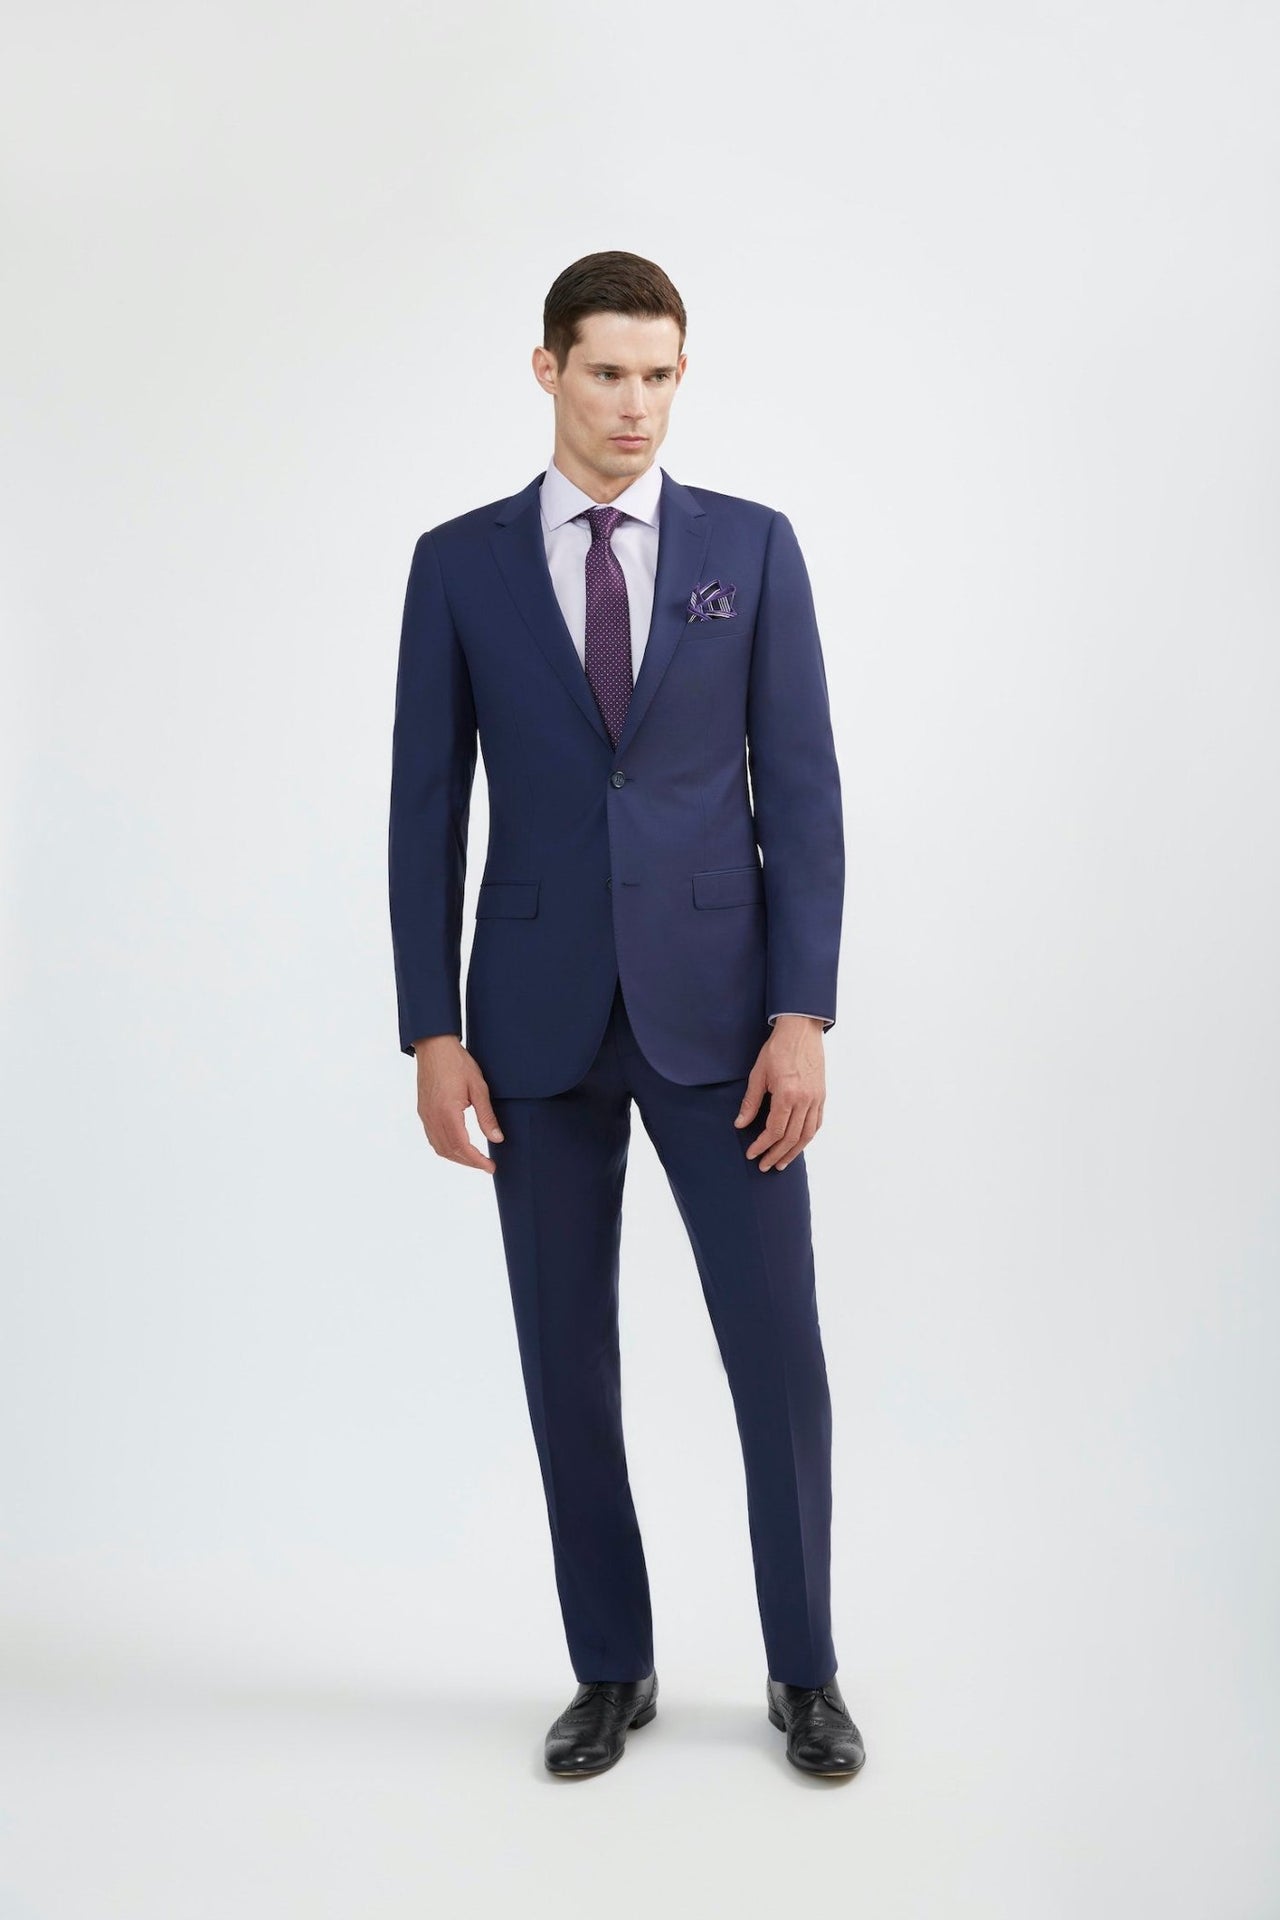 Buy suitsmith 2 Piece Tuxedo Suit, Premium Italian Fit Slim Fit Casual  Festival wear Tuxedo Suit for Men, Blue & Maroon at Amazon.in